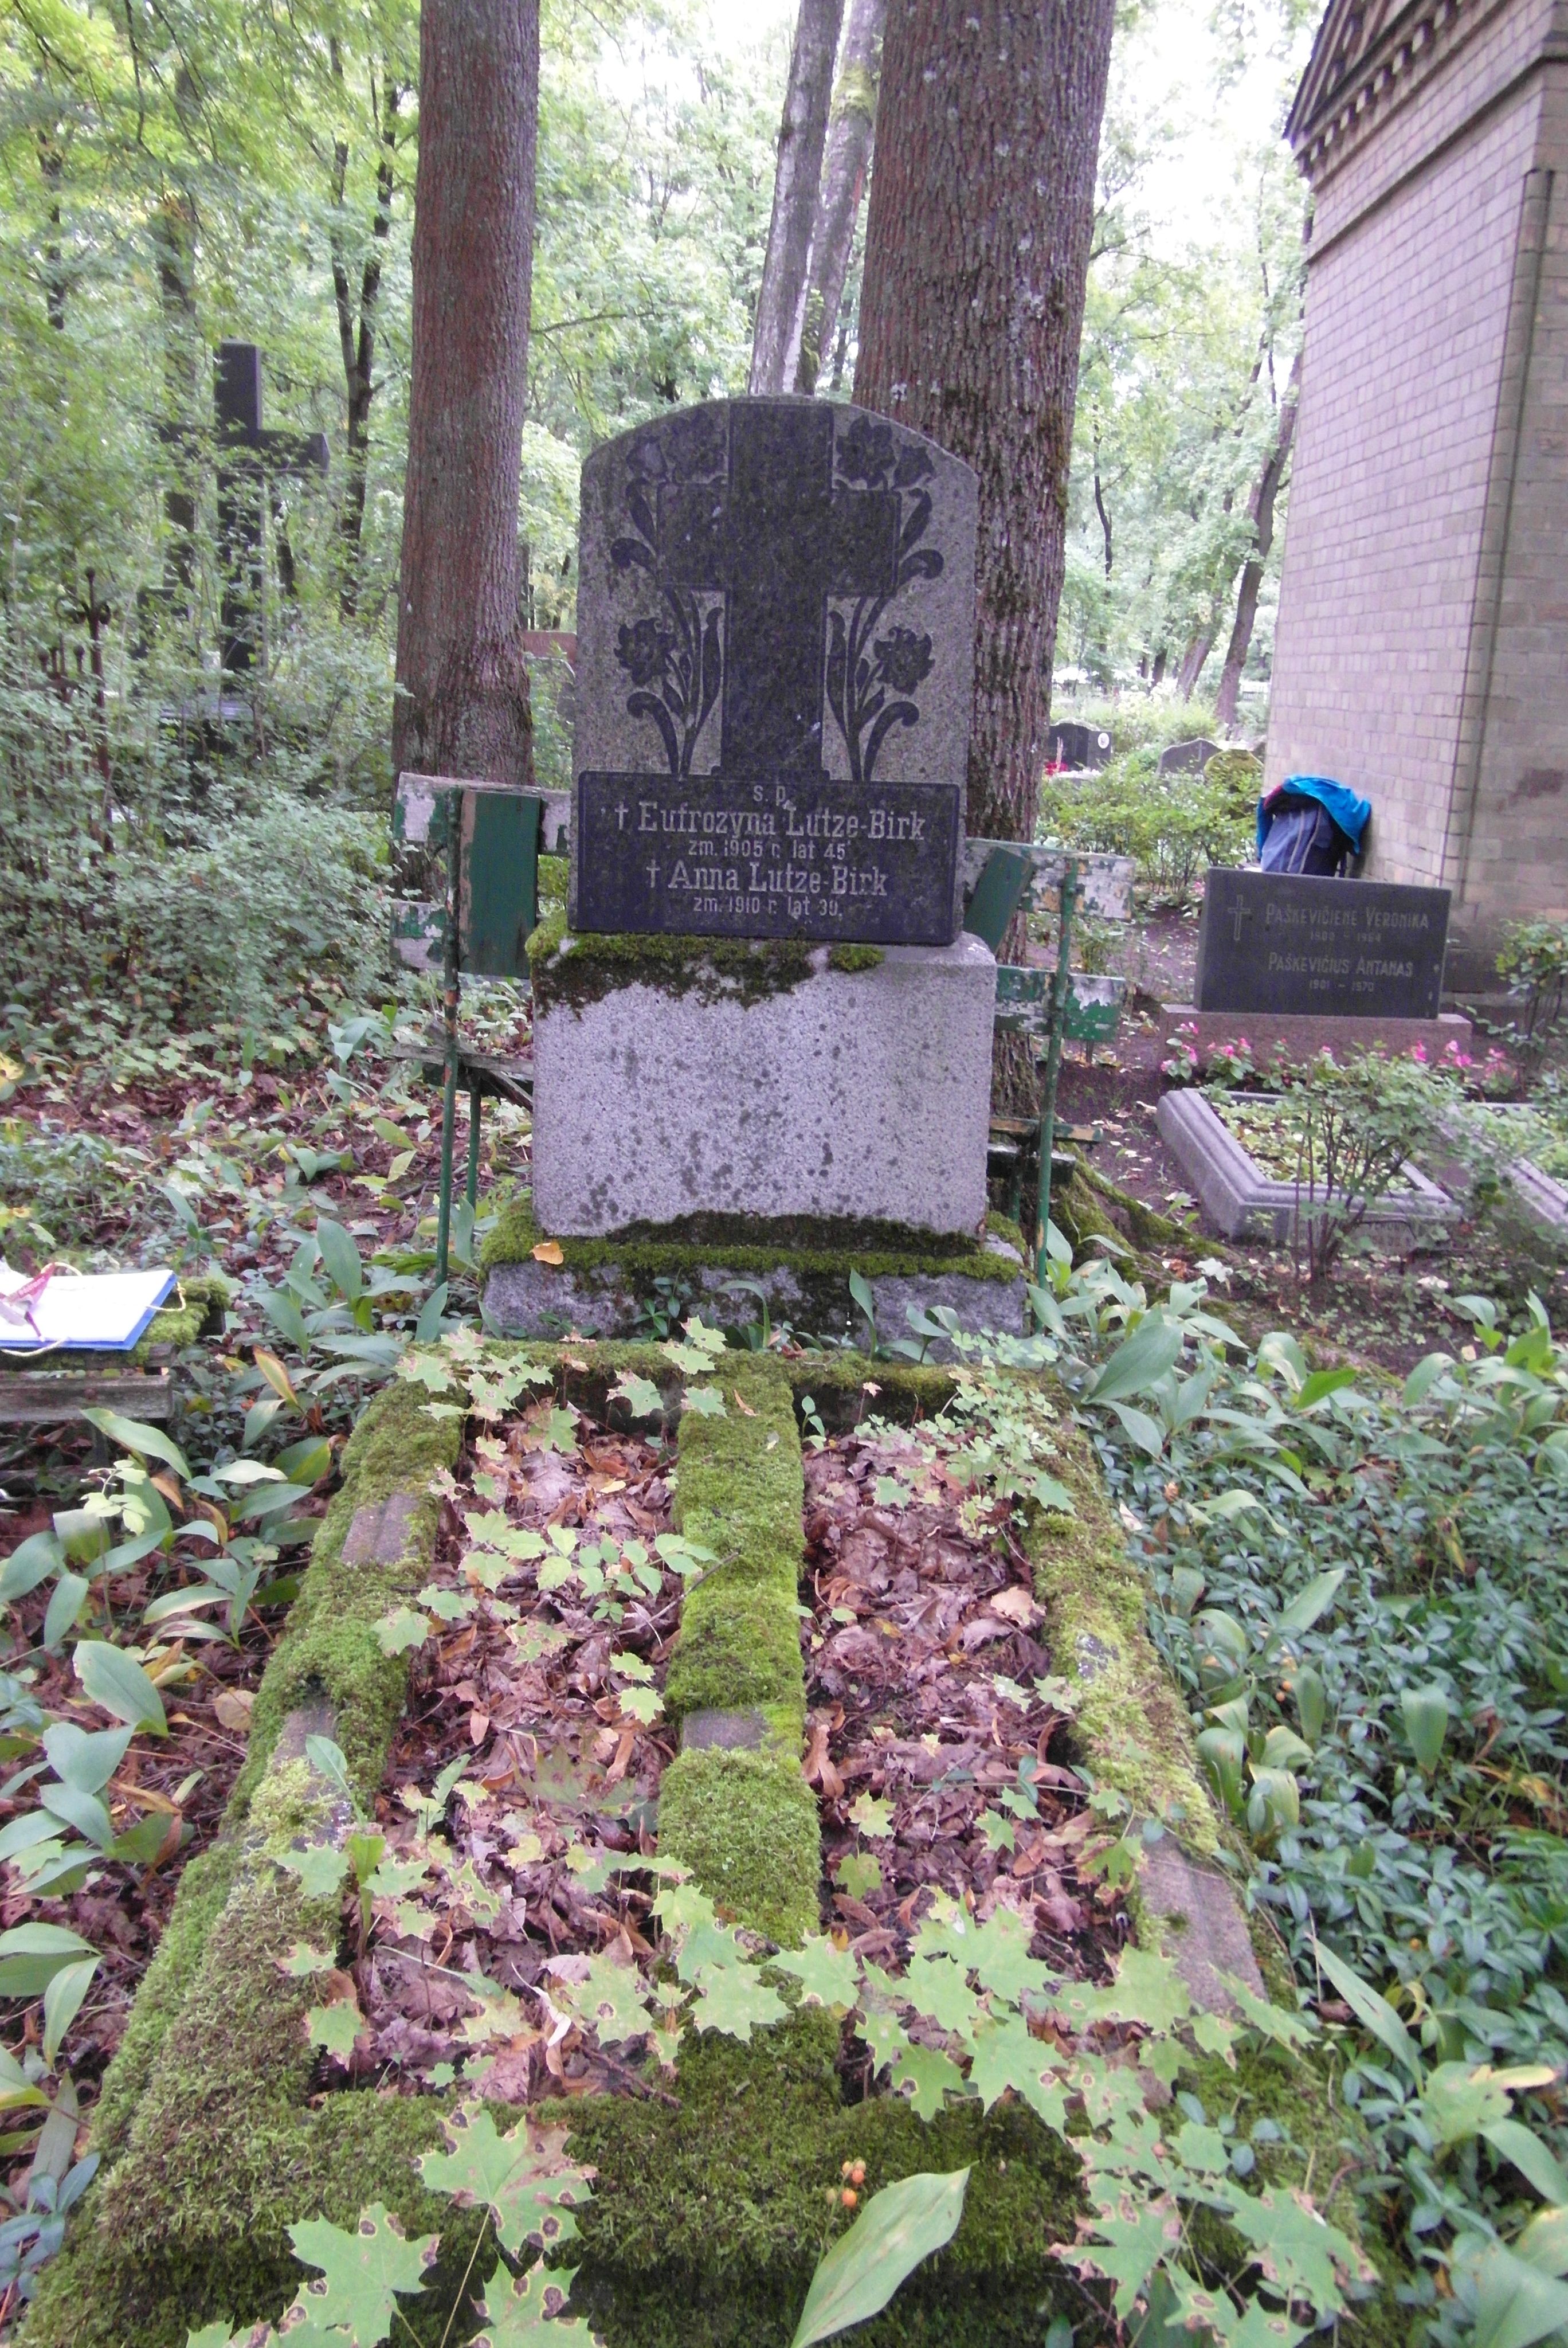 Tombstone of Euphrosinia Lutze-Birk, Anna Lutze-Birk, St Michael's cemetery in Riga, as of 2021.